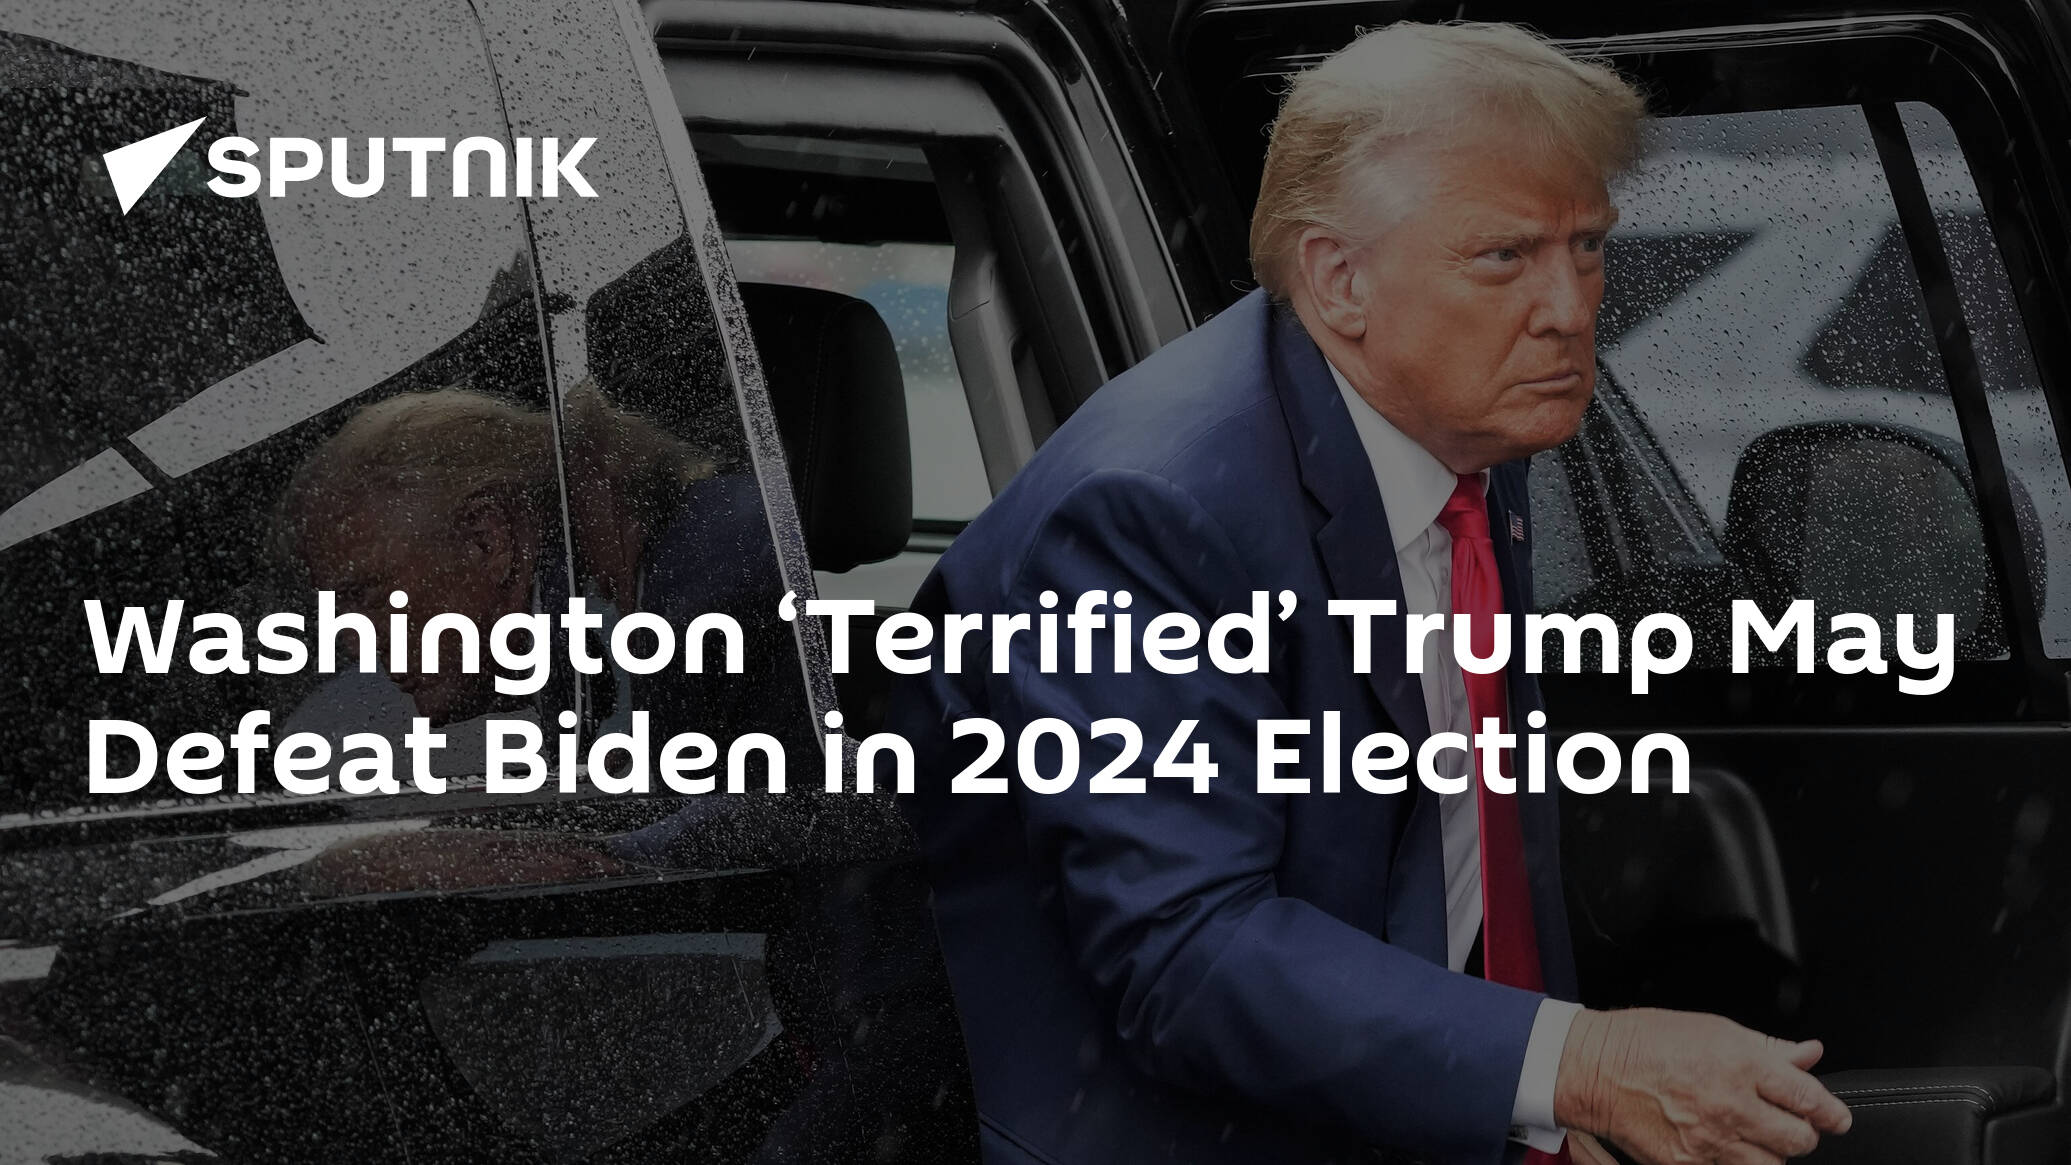 Washington ‘Terrified’ Trump May Defeat Biden in 2024 Election